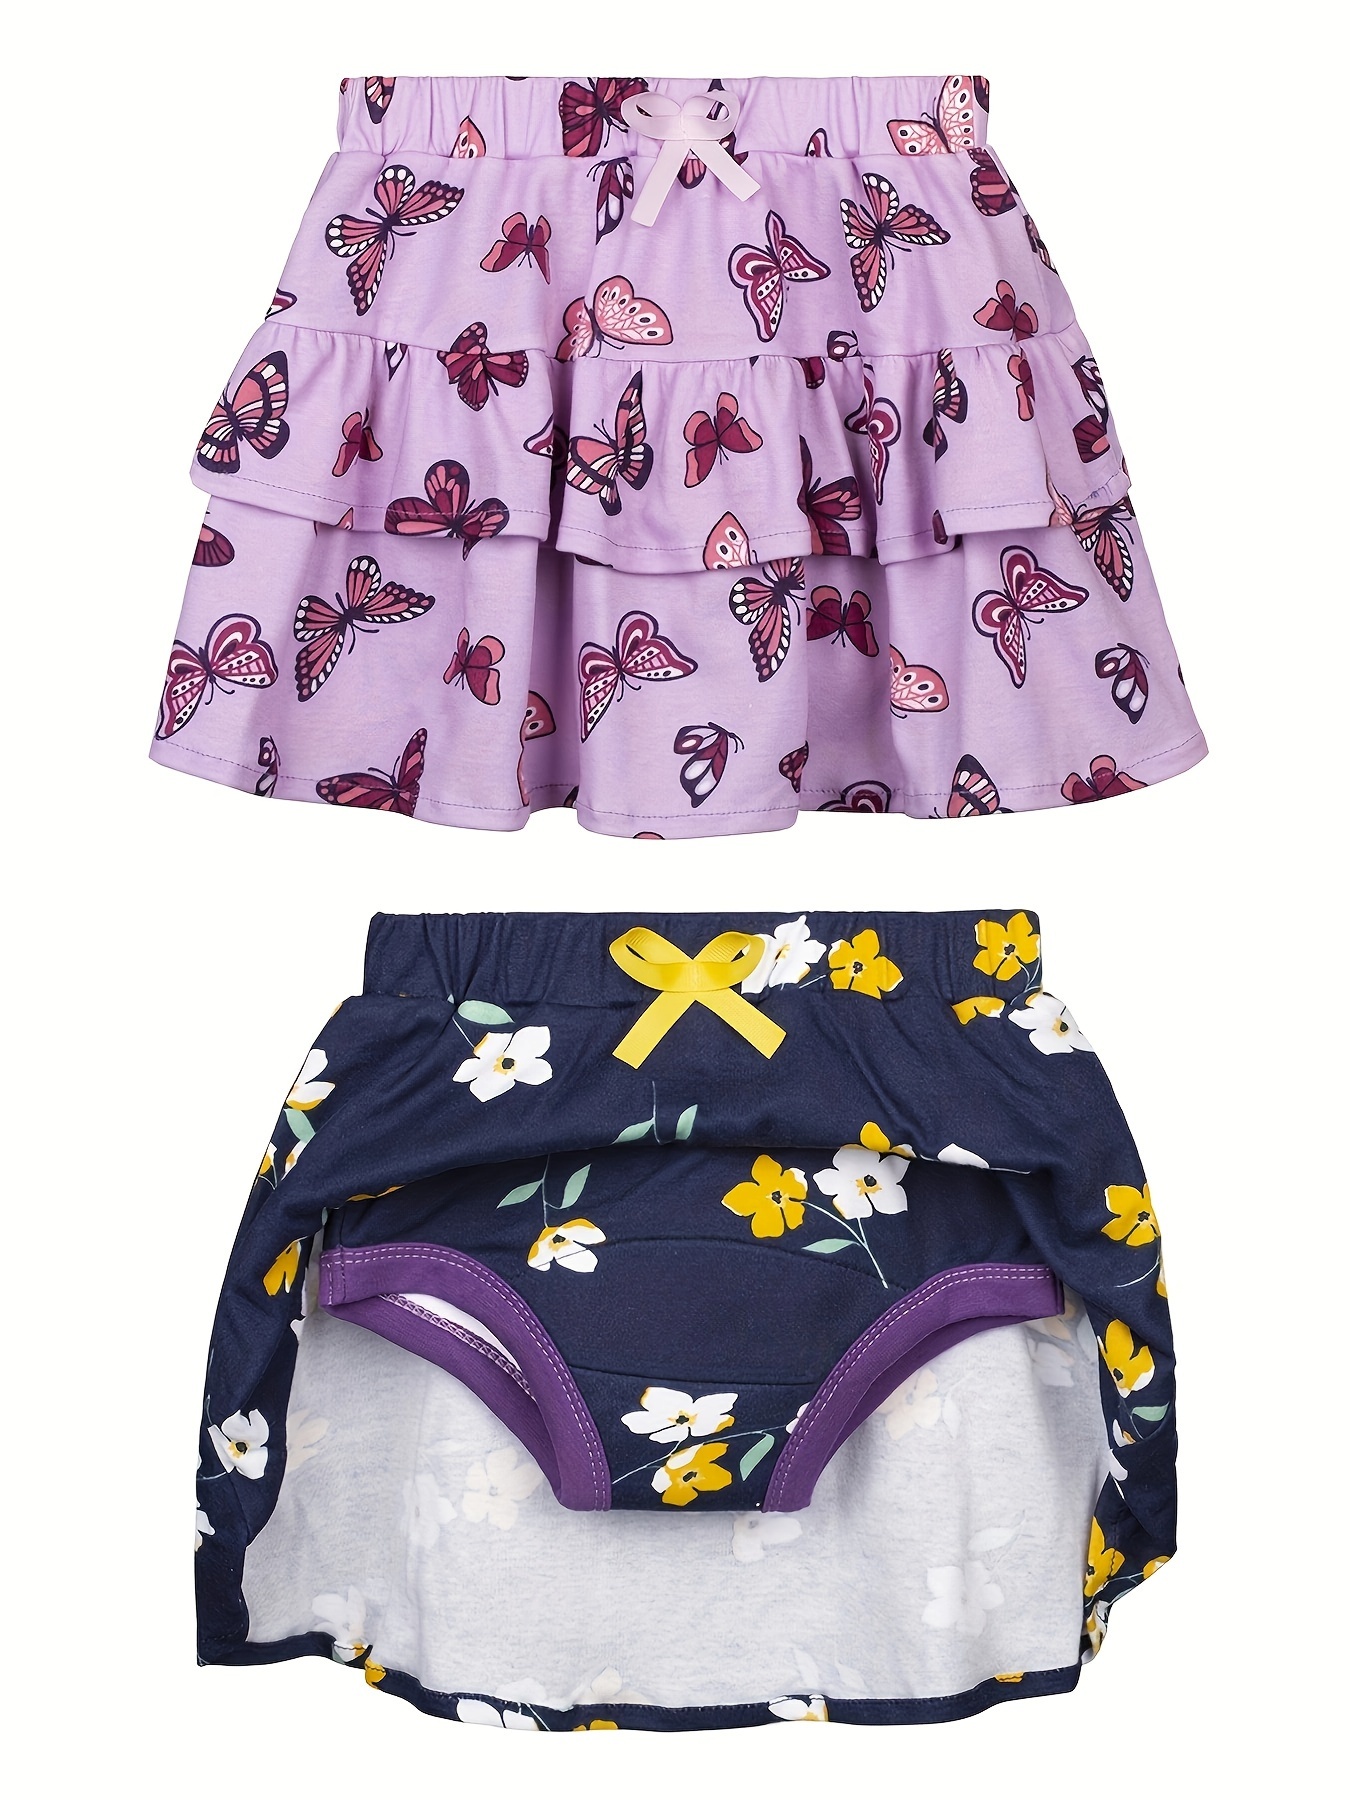 MooMoo Baby Training Underwear Absorbent - BestBuy Mall